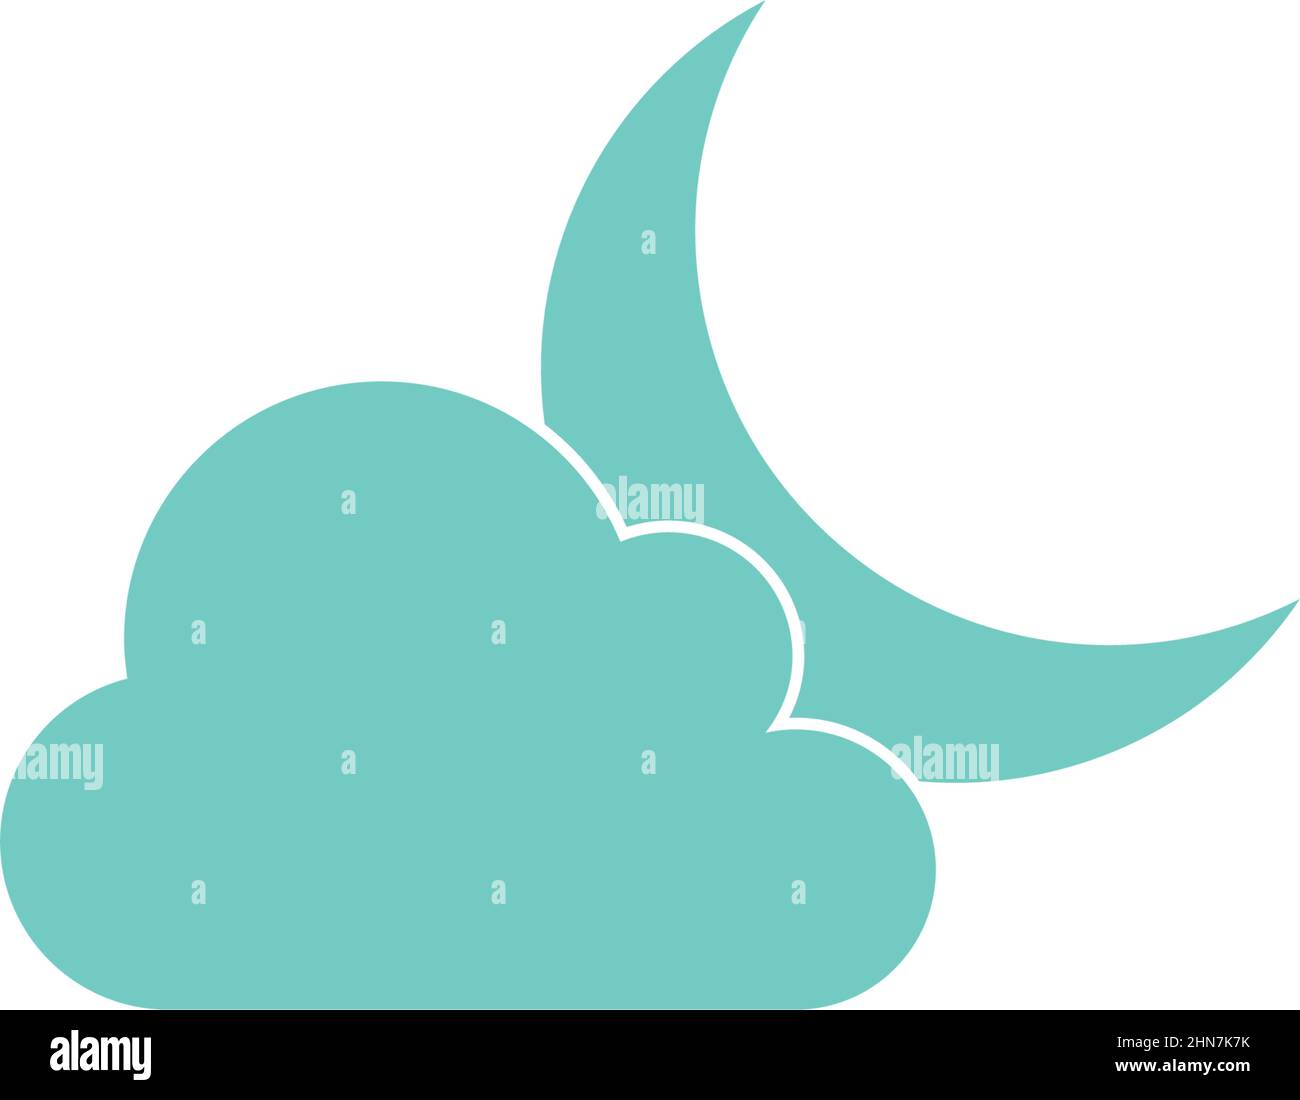 Moon icon logo flat design illustration template Stock Vector